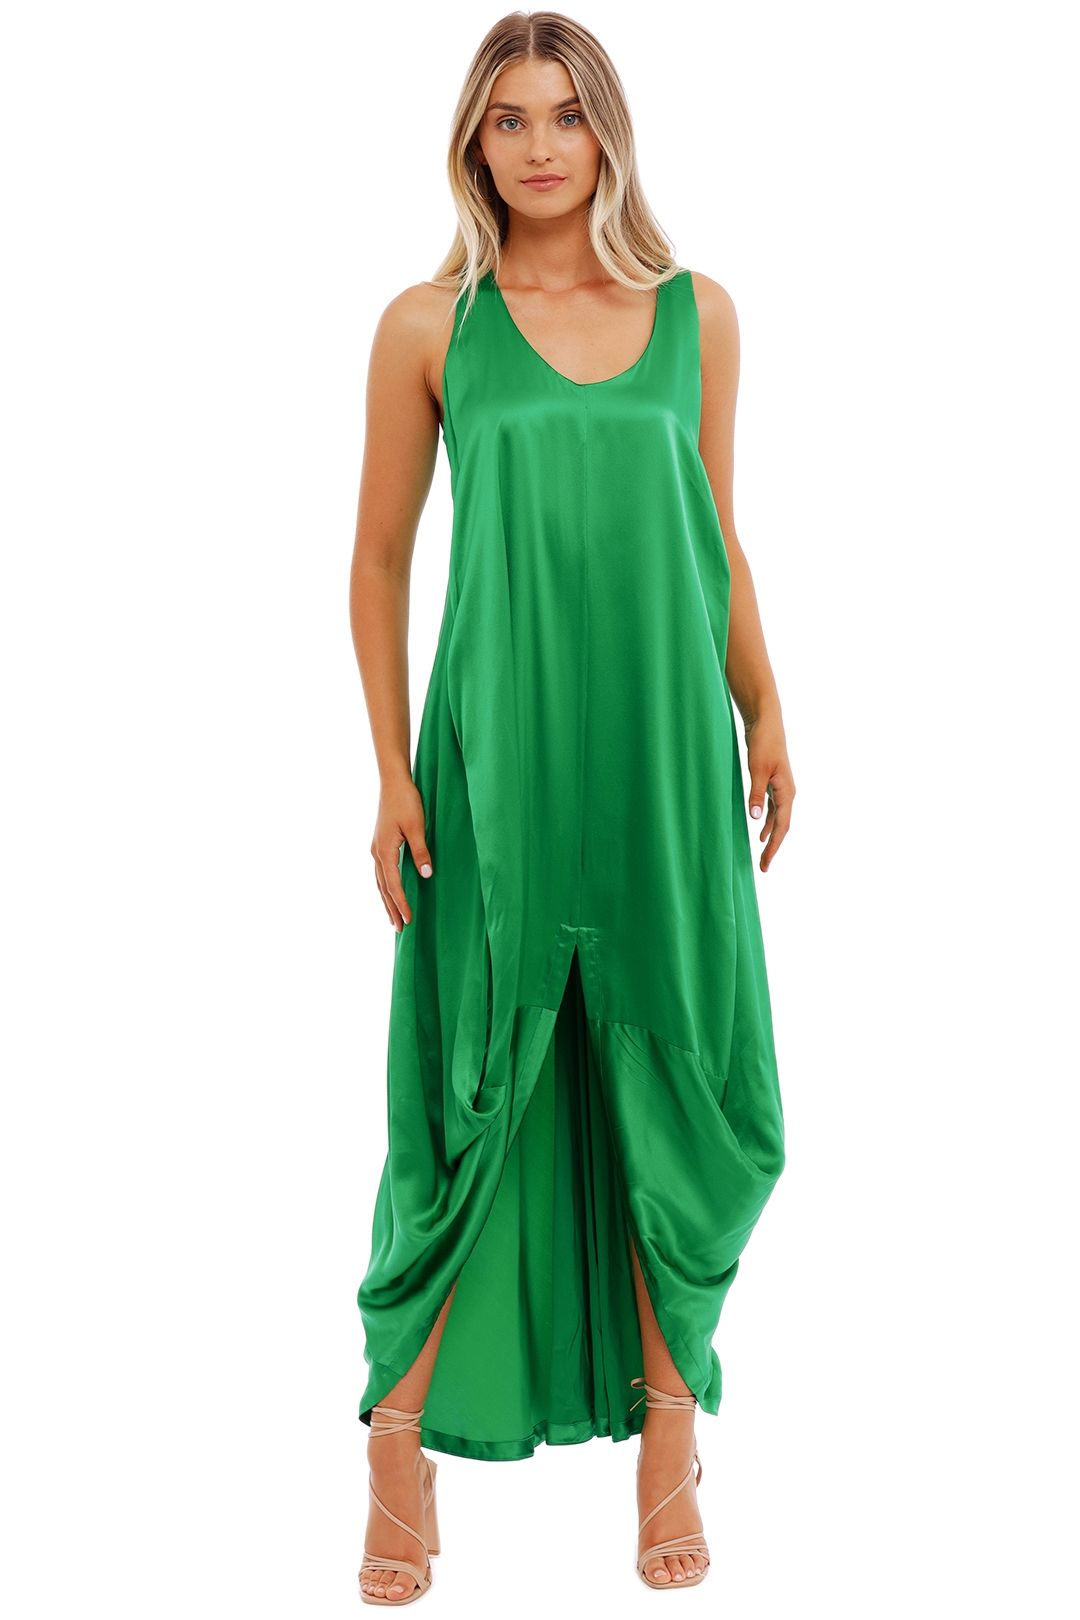 KITX Float Dress Green sleeveless